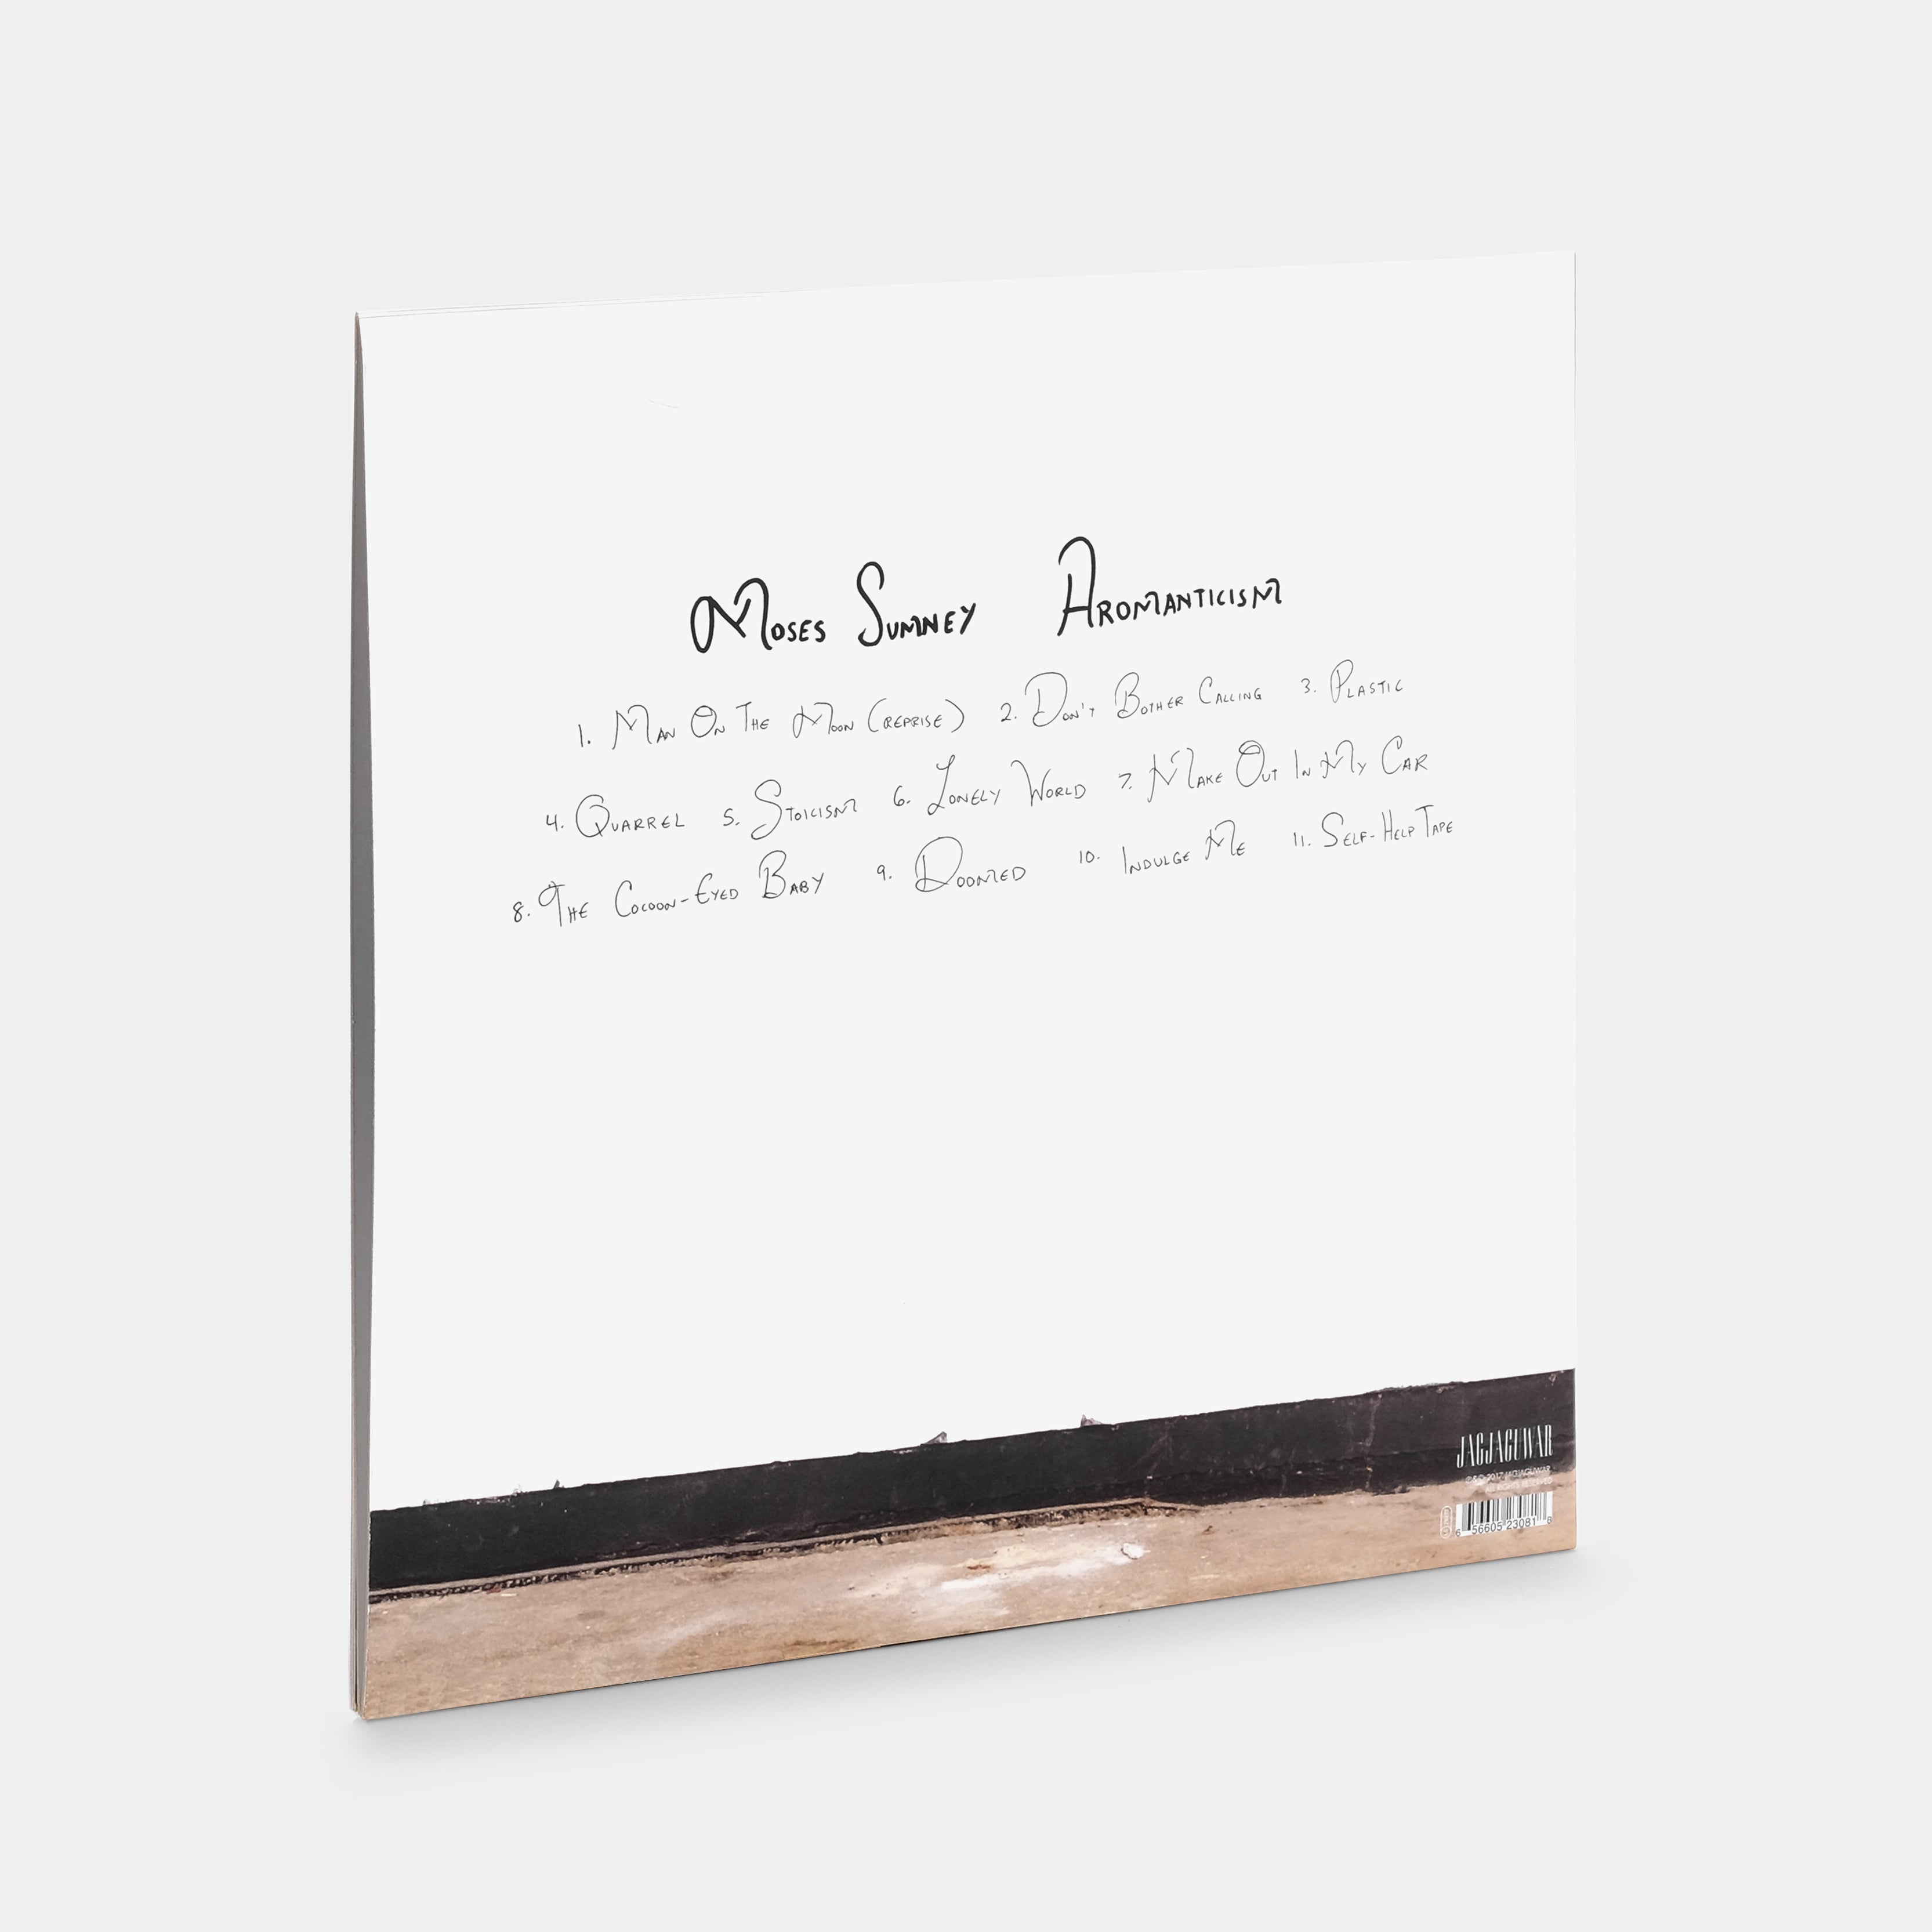 Moses Sumney - Aromanticism LP Vinyl Record